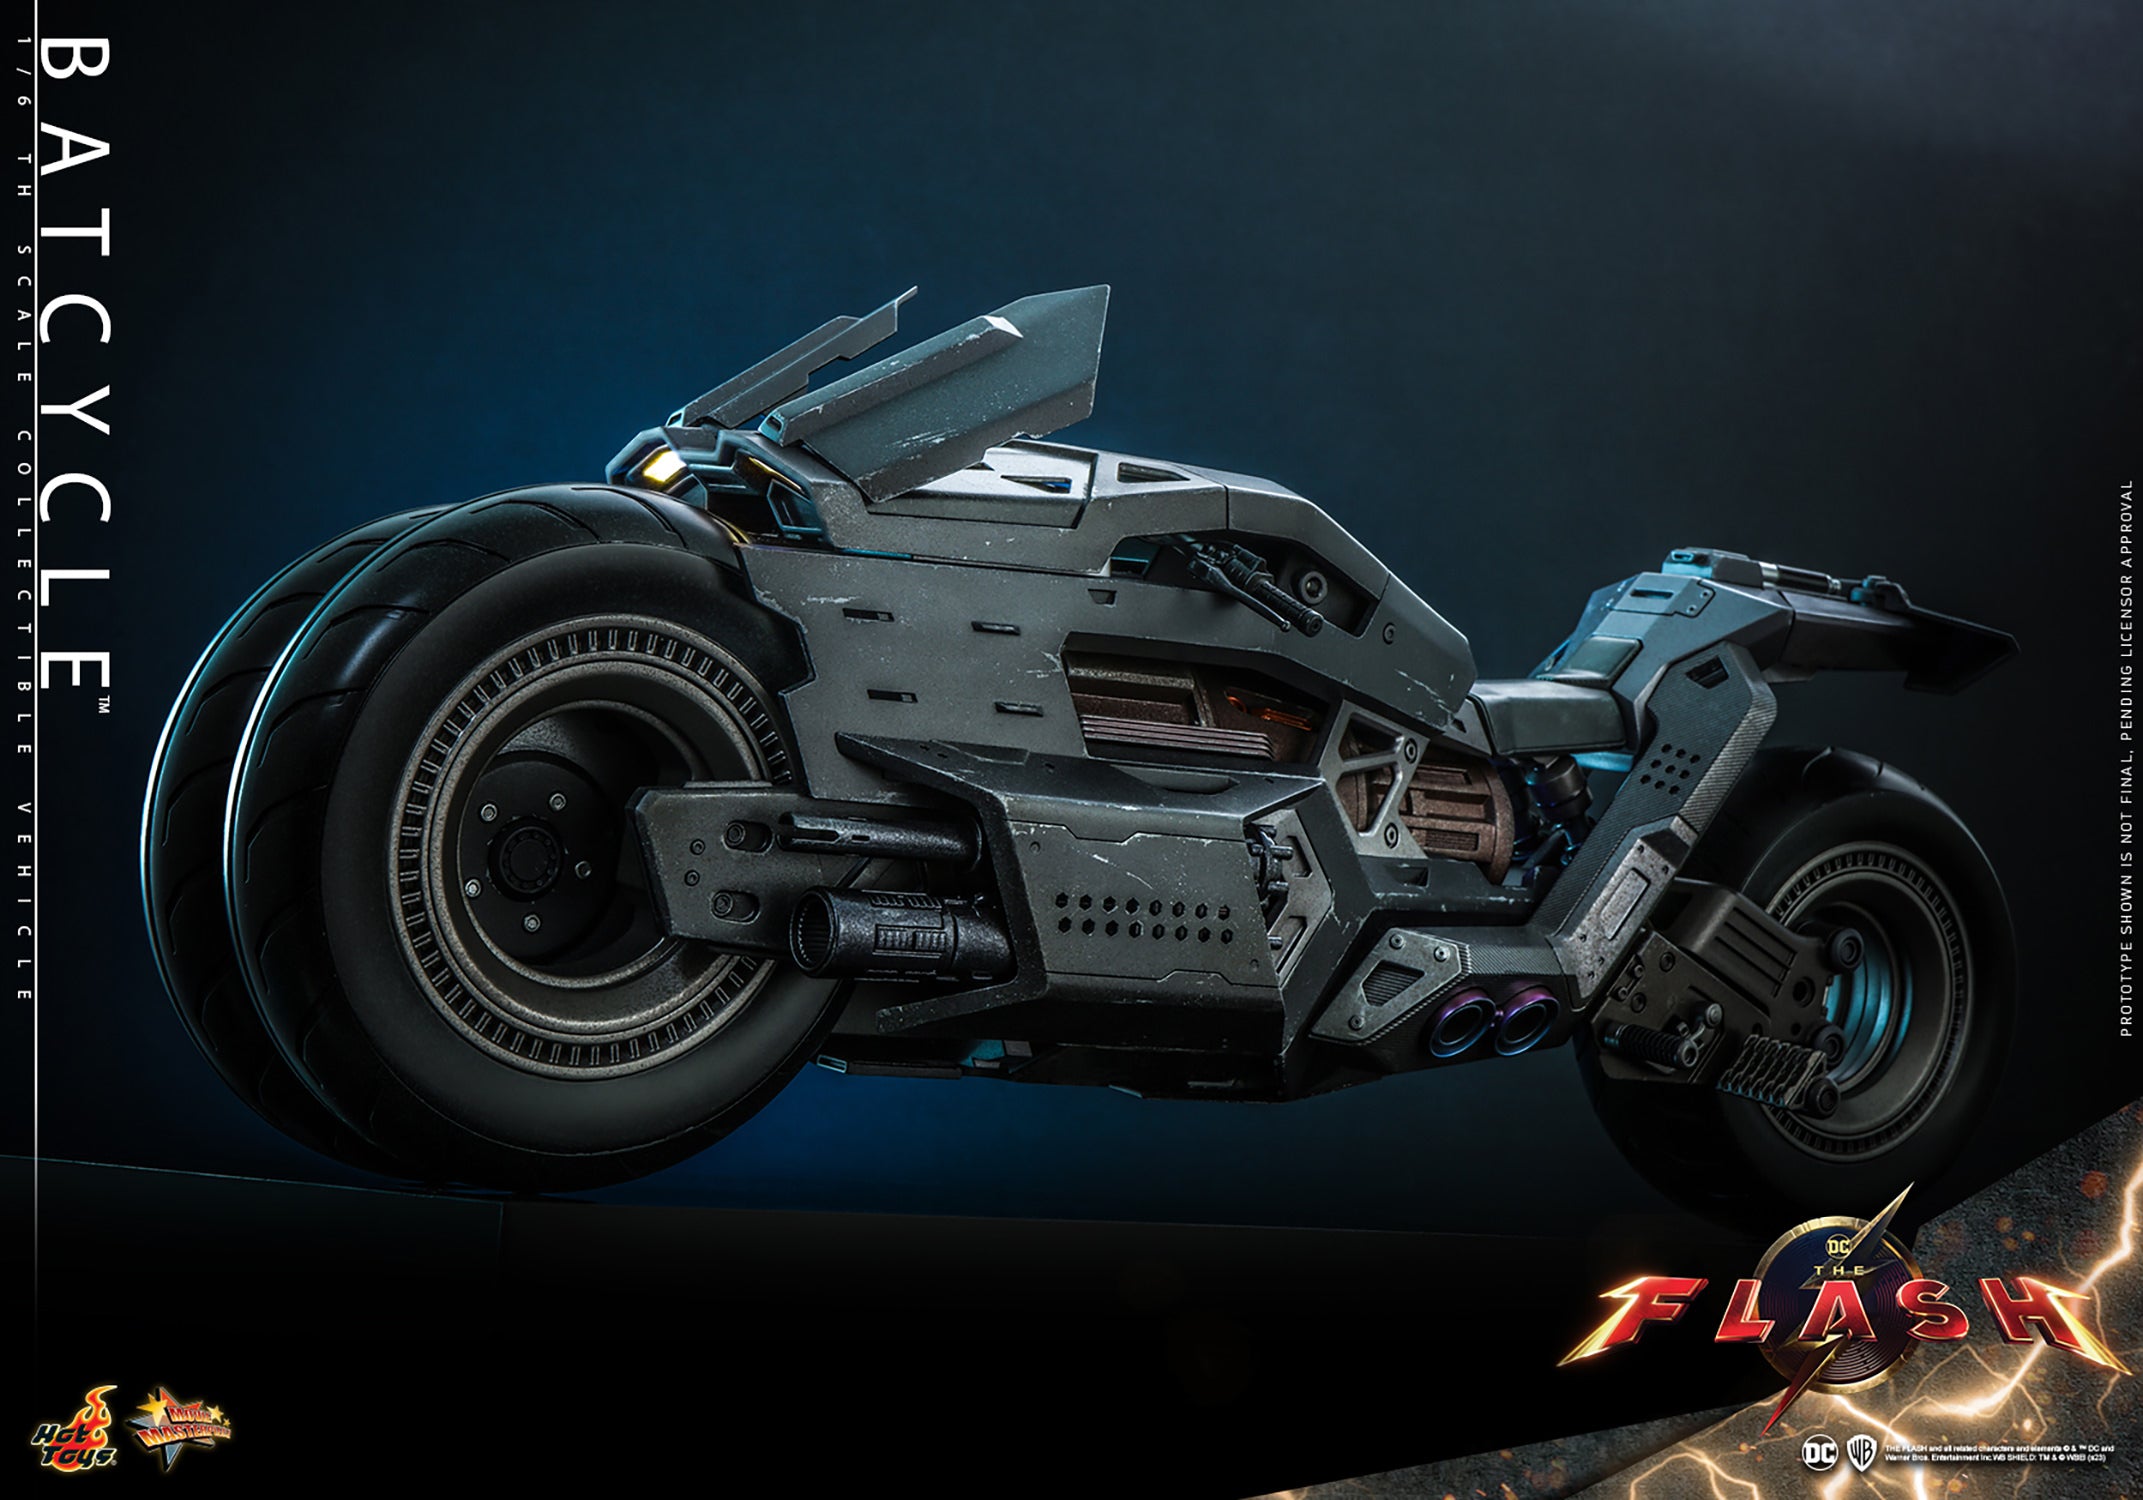 Batcycle: The Flash: Dc Comics: Hot Toys